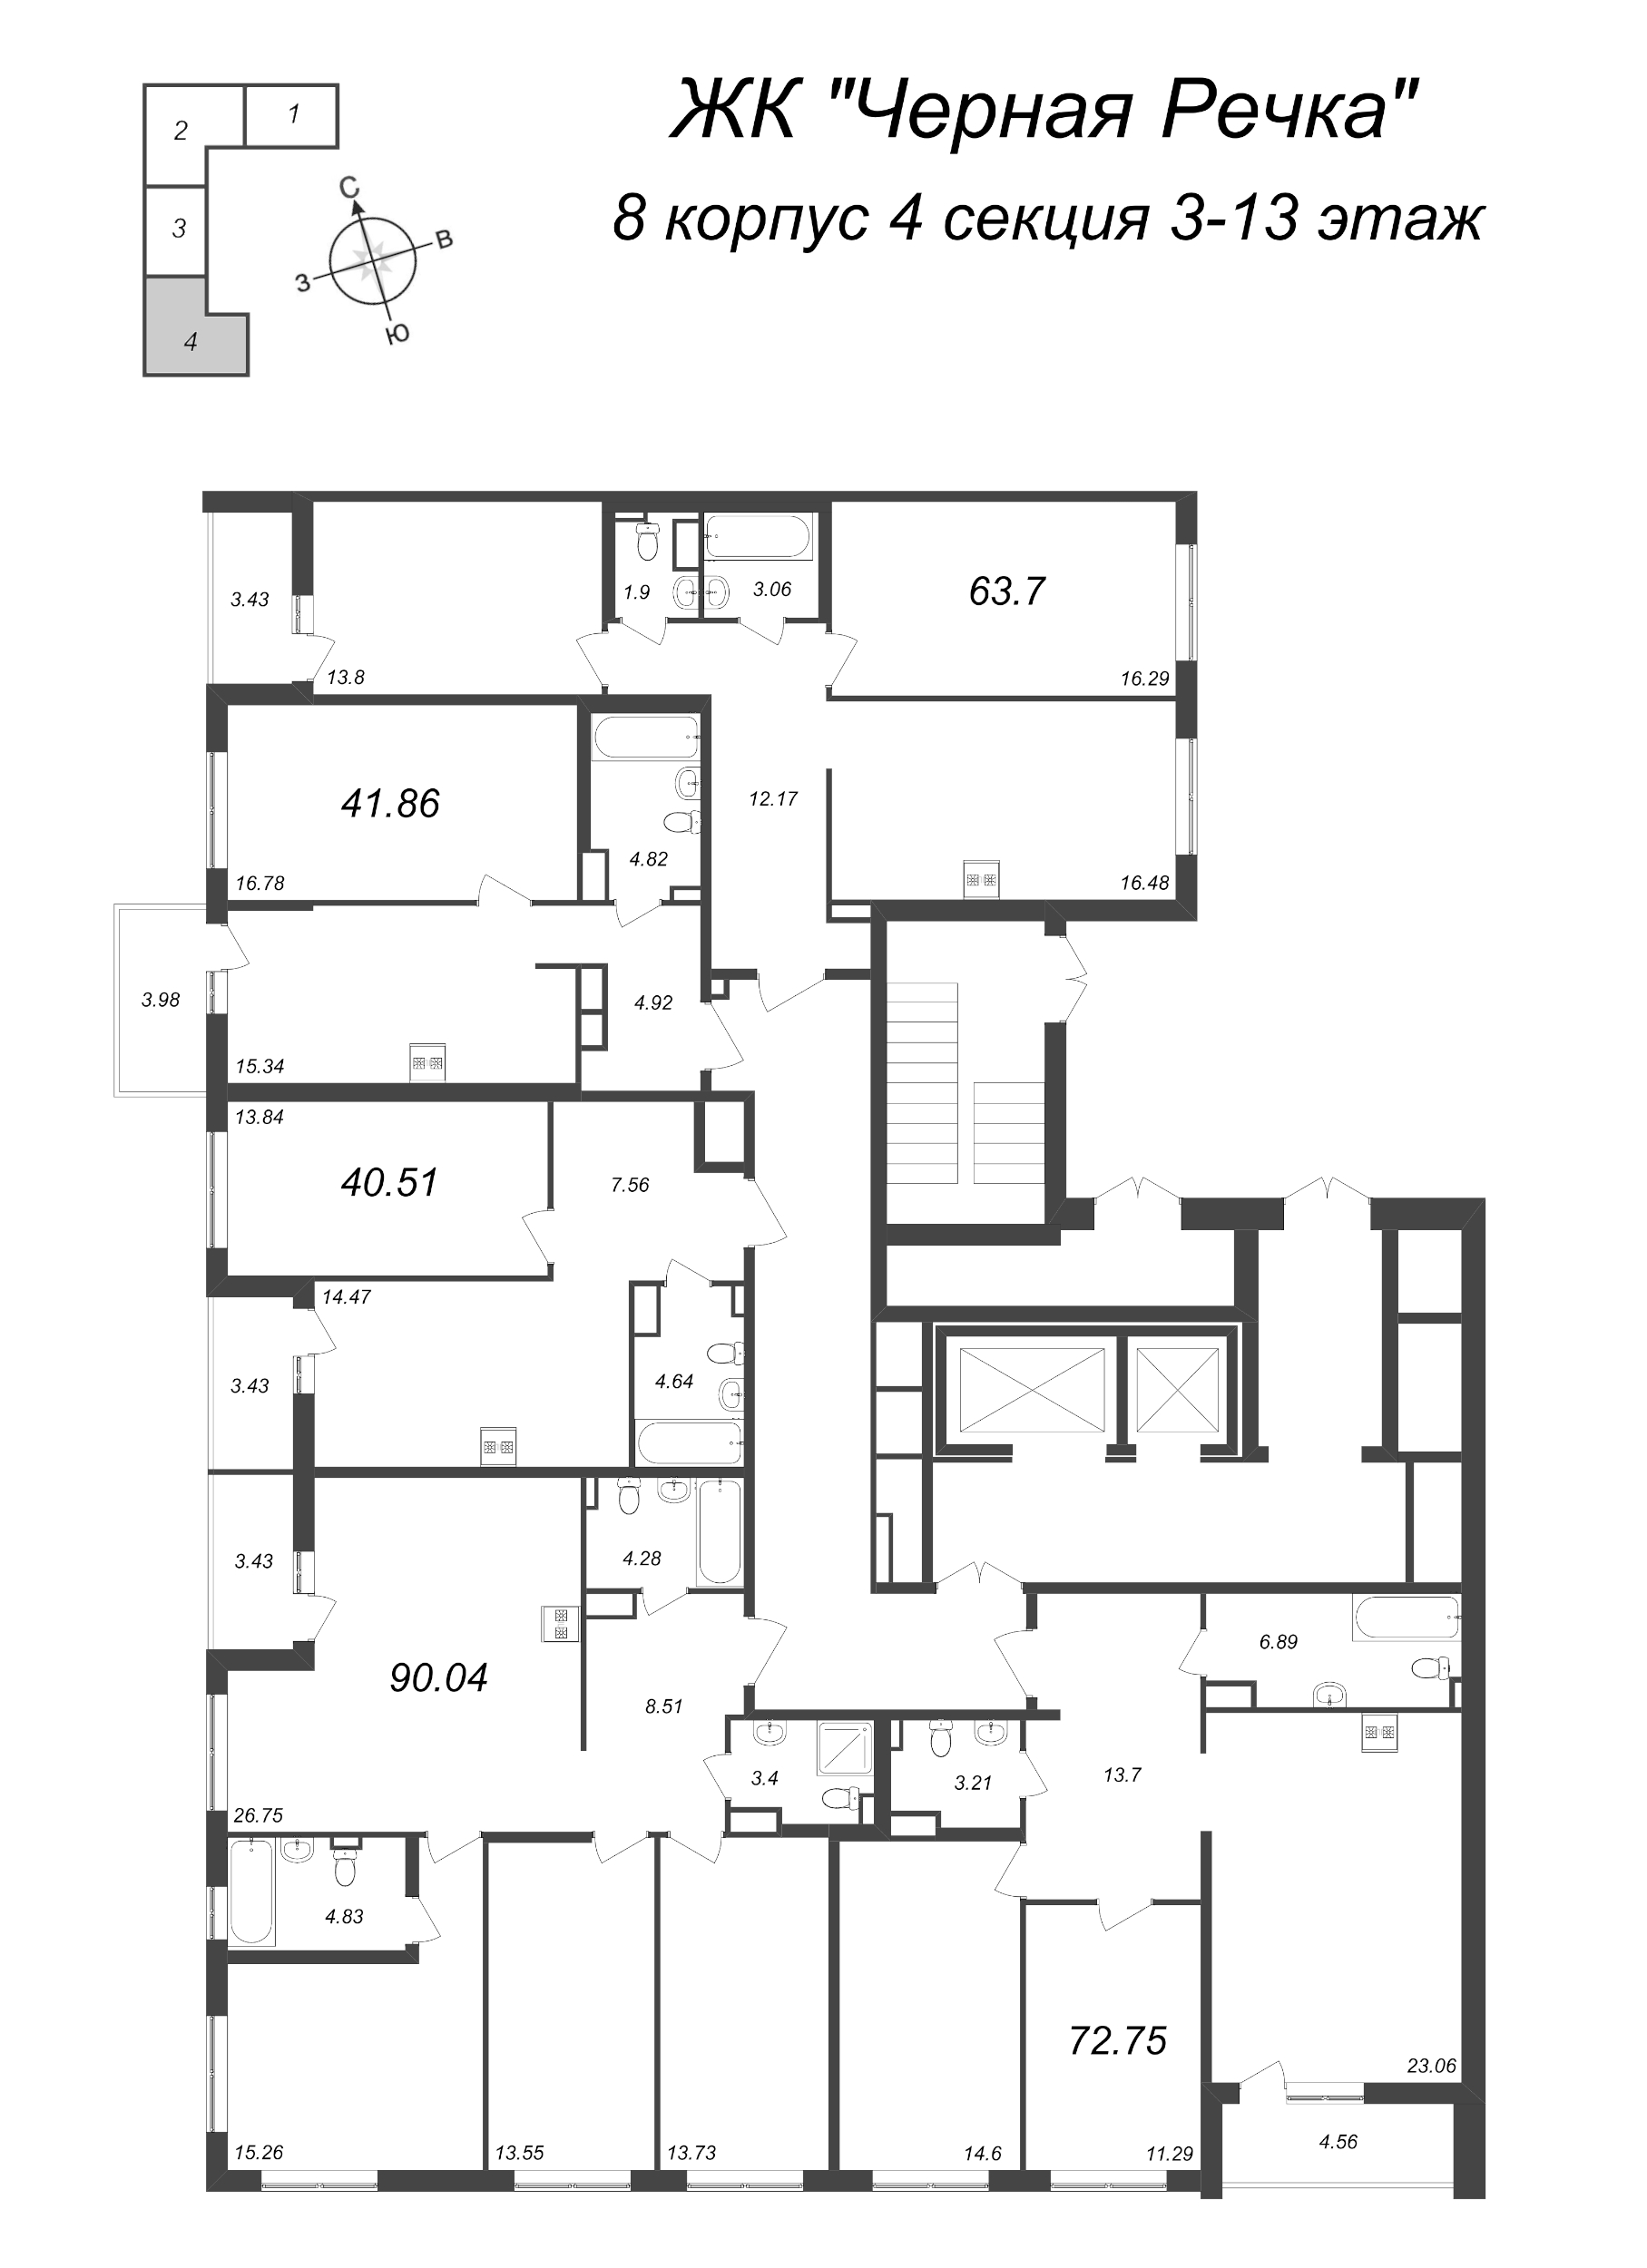 2-комнатная (Евро) квартира, 40.51 м² - планировка этажа